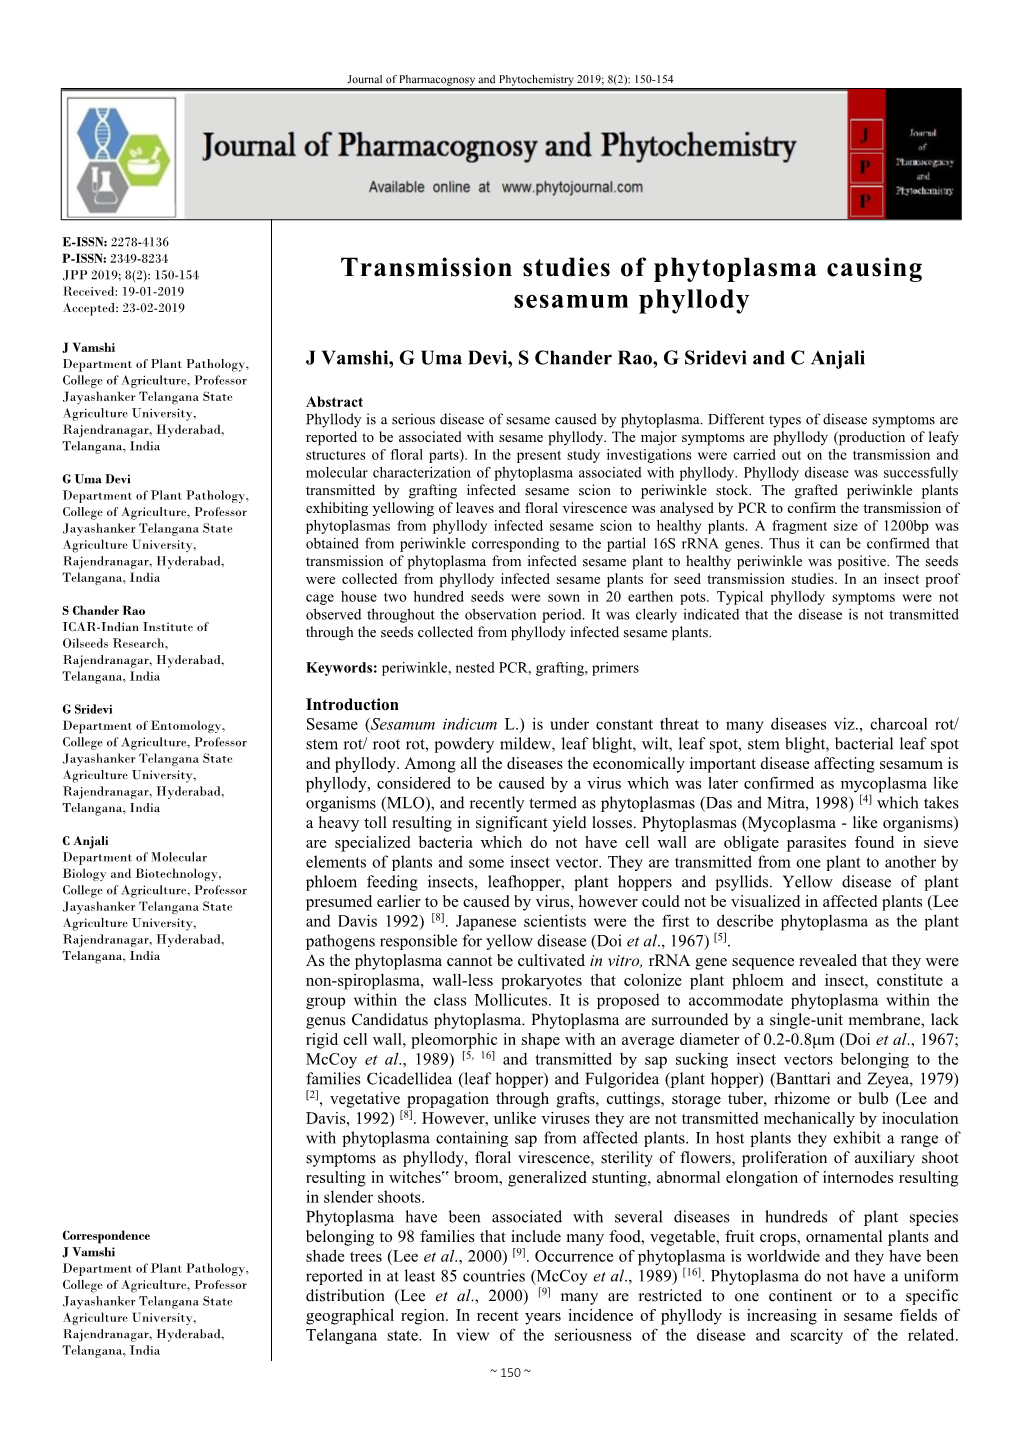 Transmission Studies of Phytoplasma Causing Sesamum Phyllody